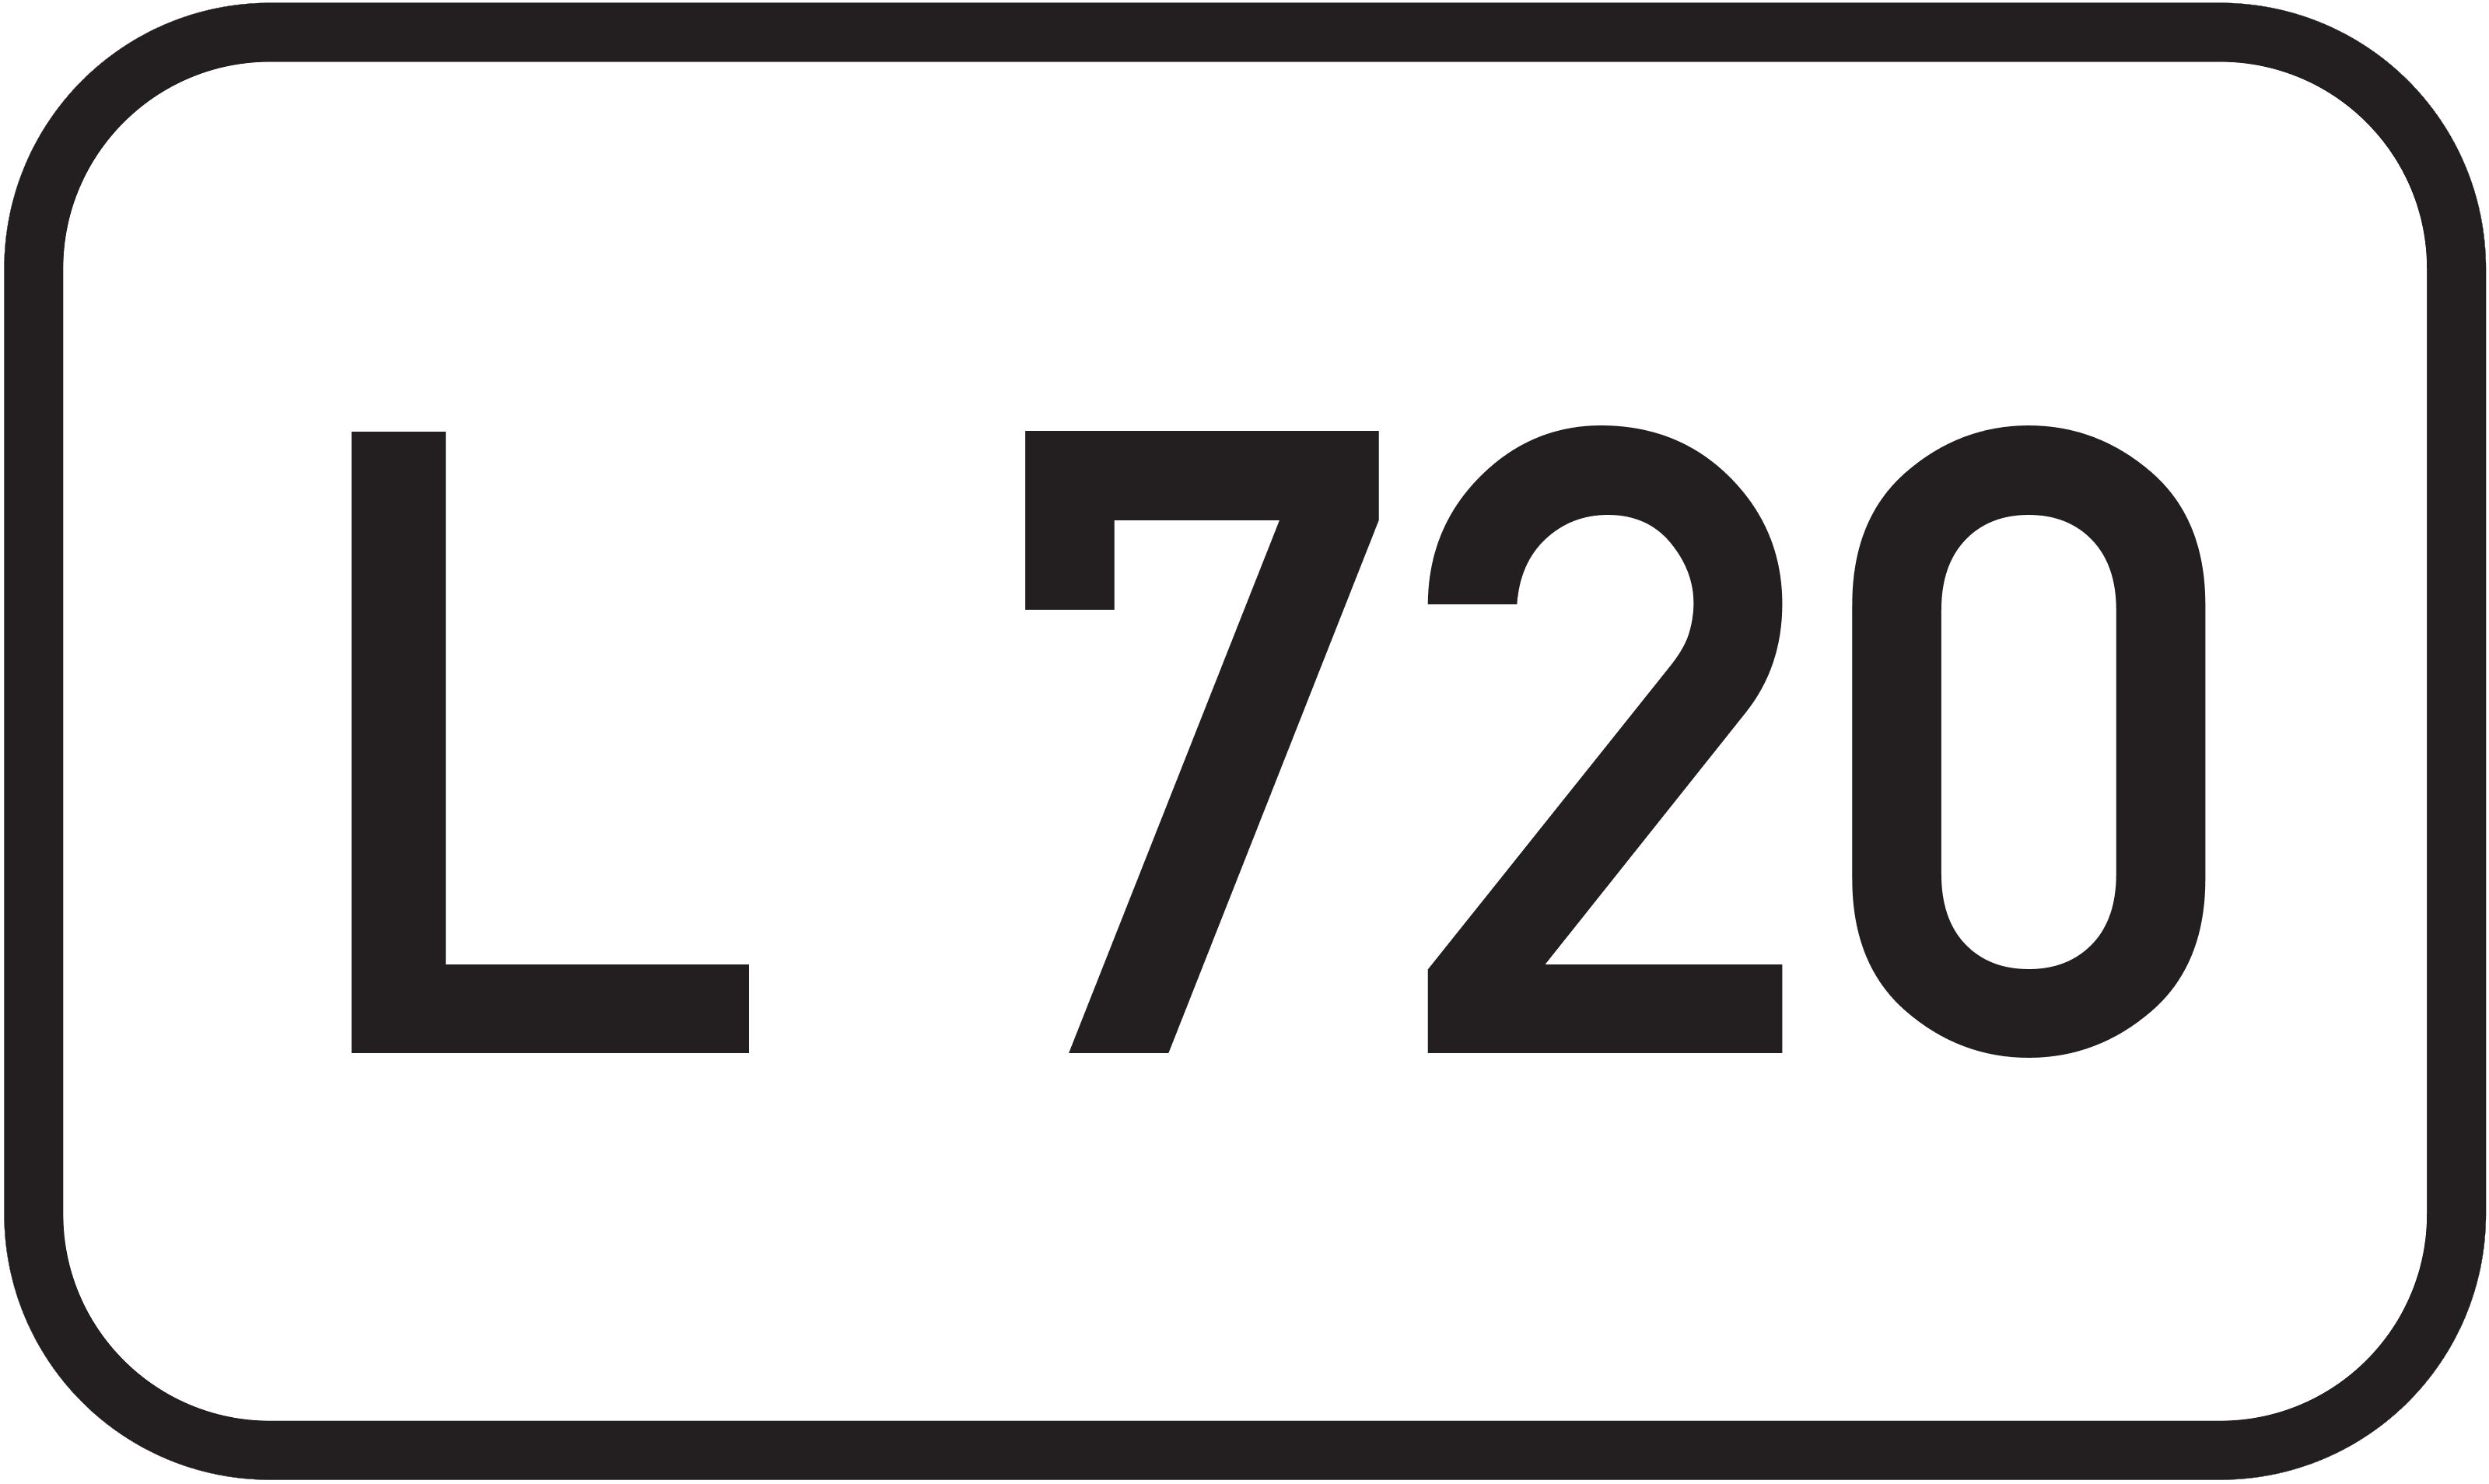 Straßenschild Landesstraße L 720